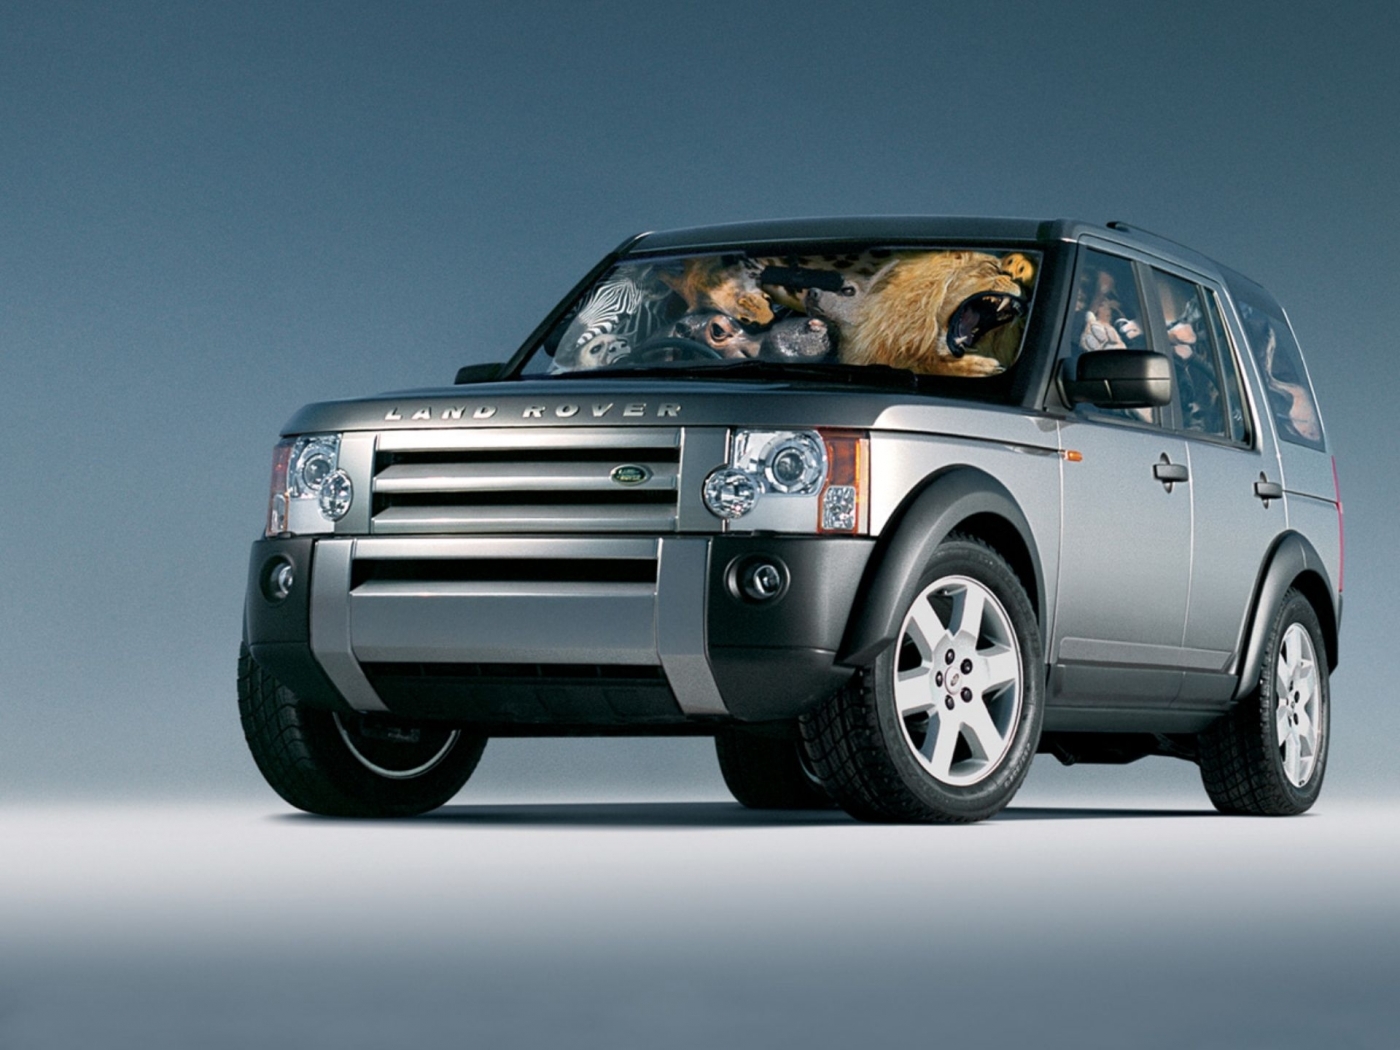 Descarga gratuita de fondo de pantalla para móvil de Transporte, Automóvil, Range Rover.